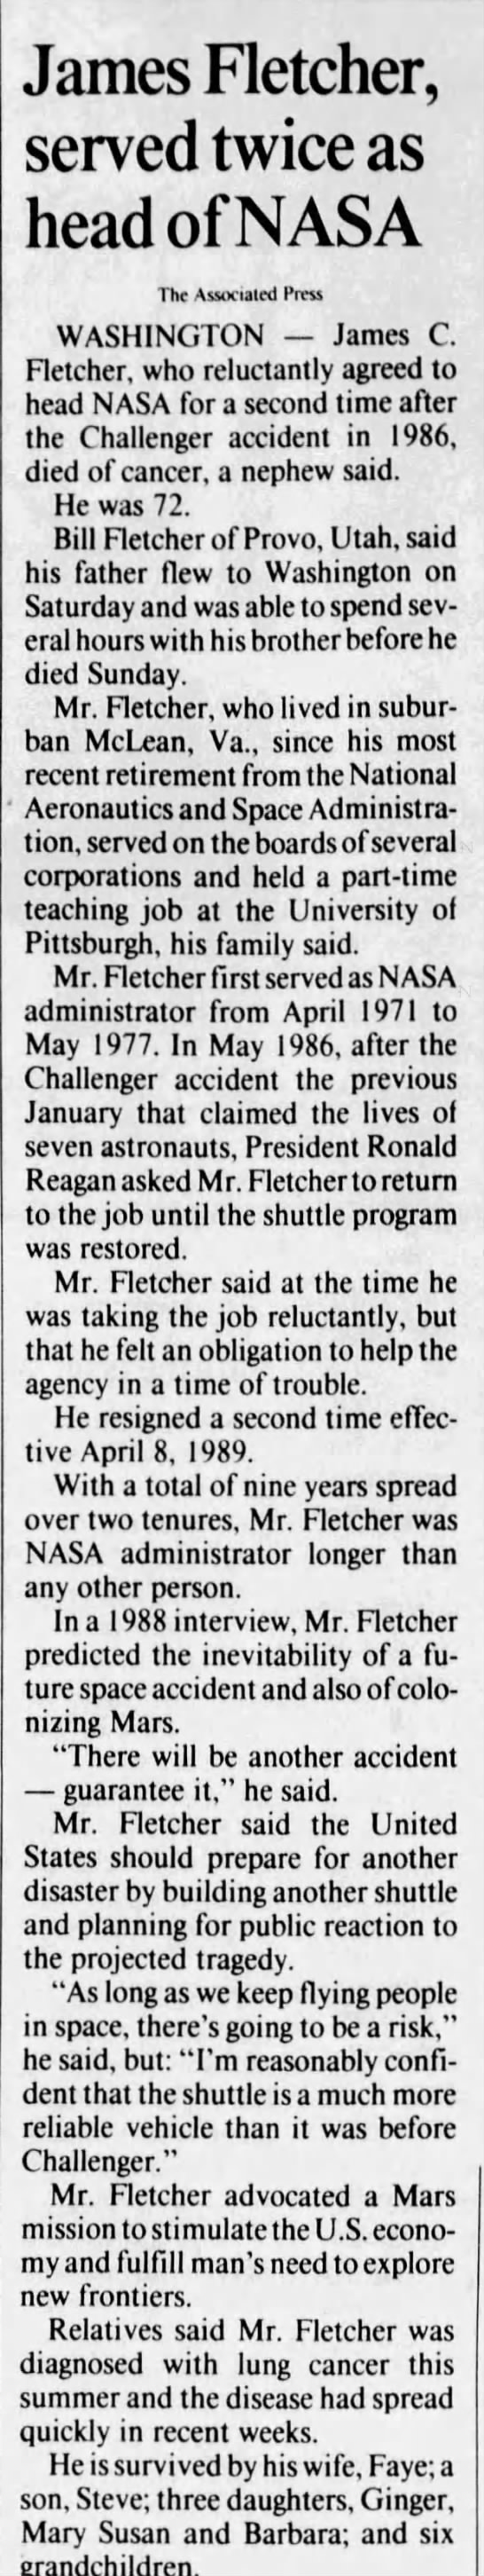 James Fletcher NASA Administrator - 